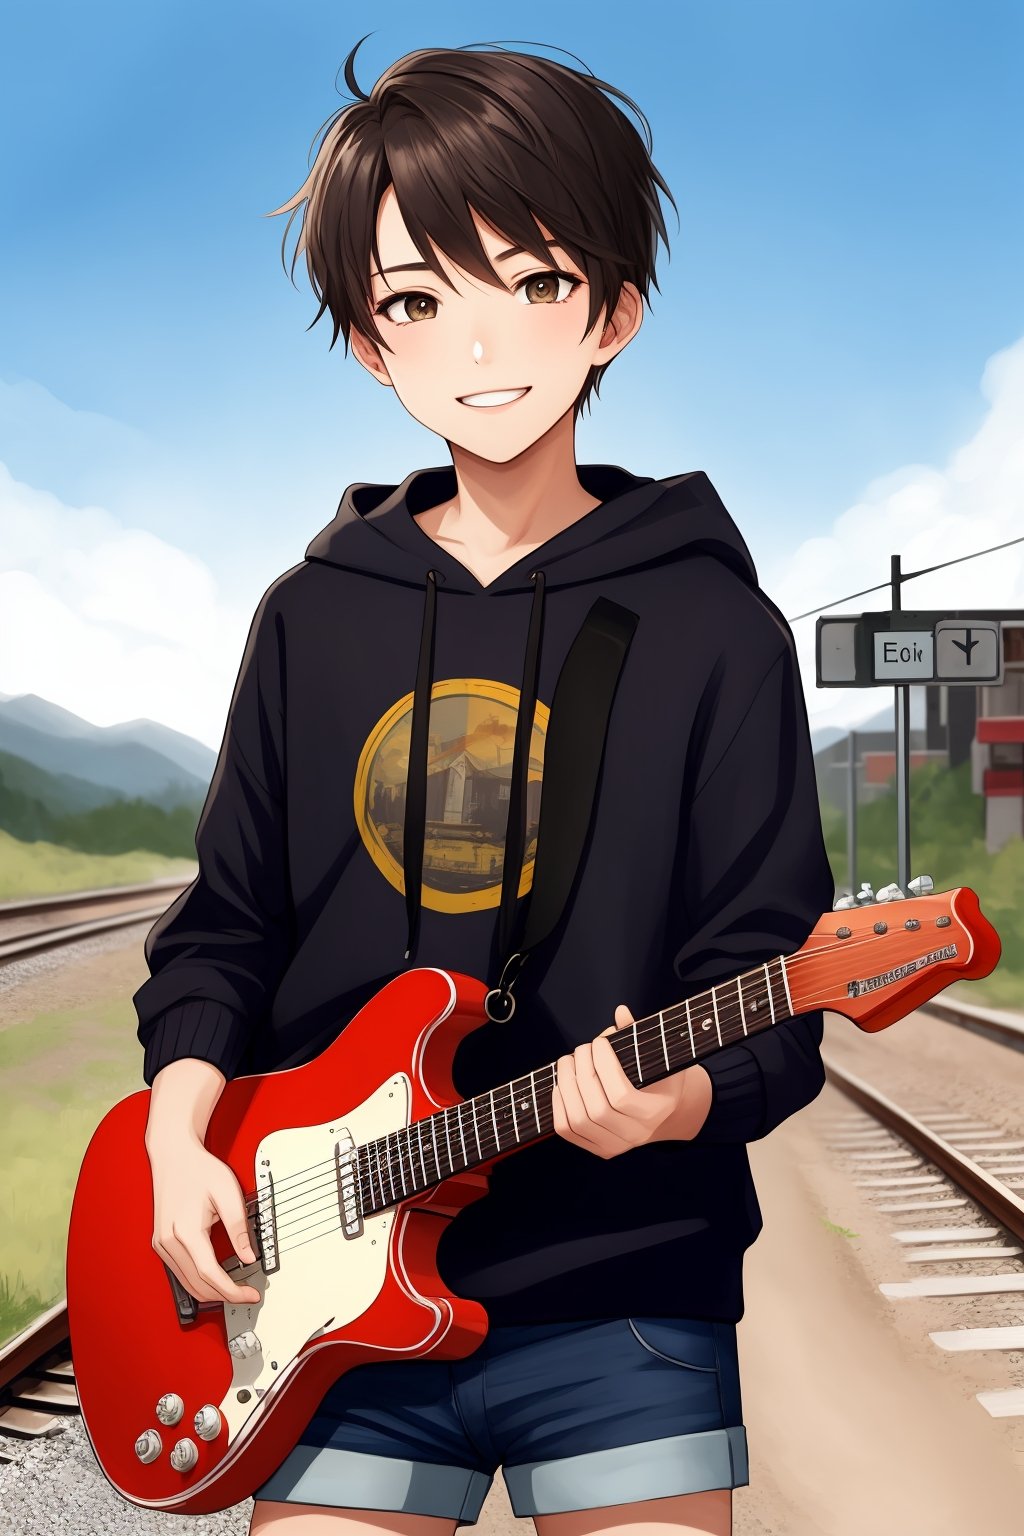 hoodie, shorts, very short hair, evil smile, 1boy, guitar, railroad crossing, 